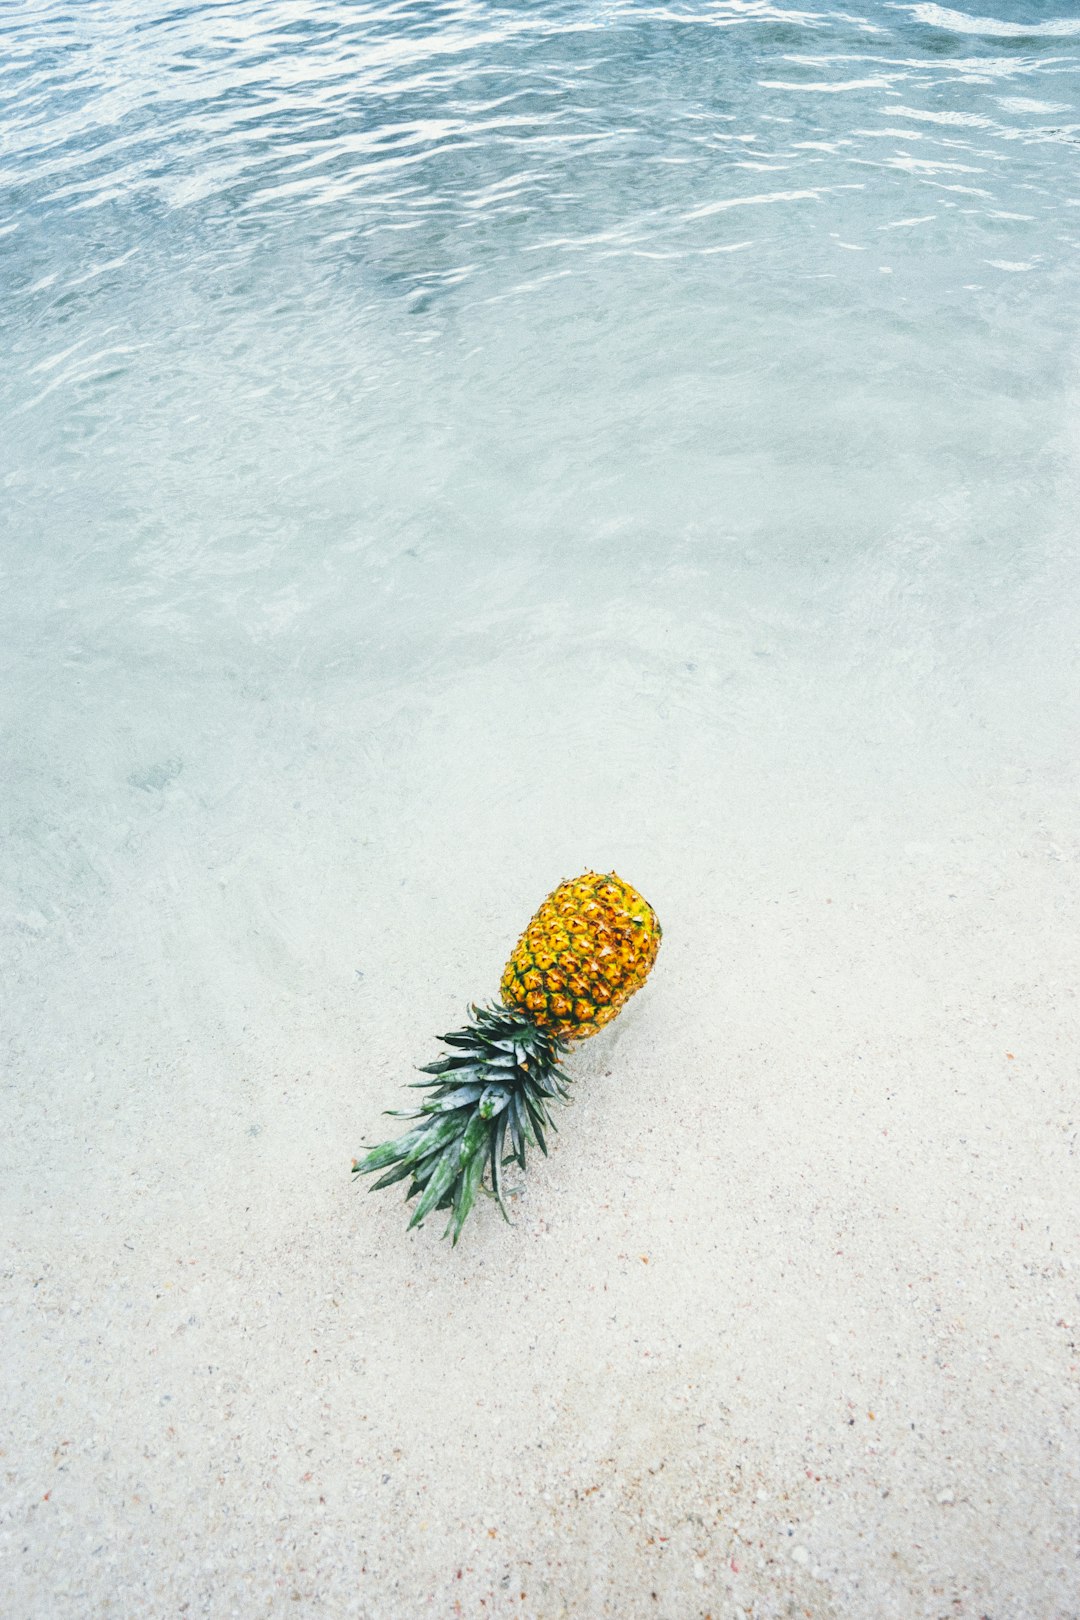 photo of pineapple in the ocean